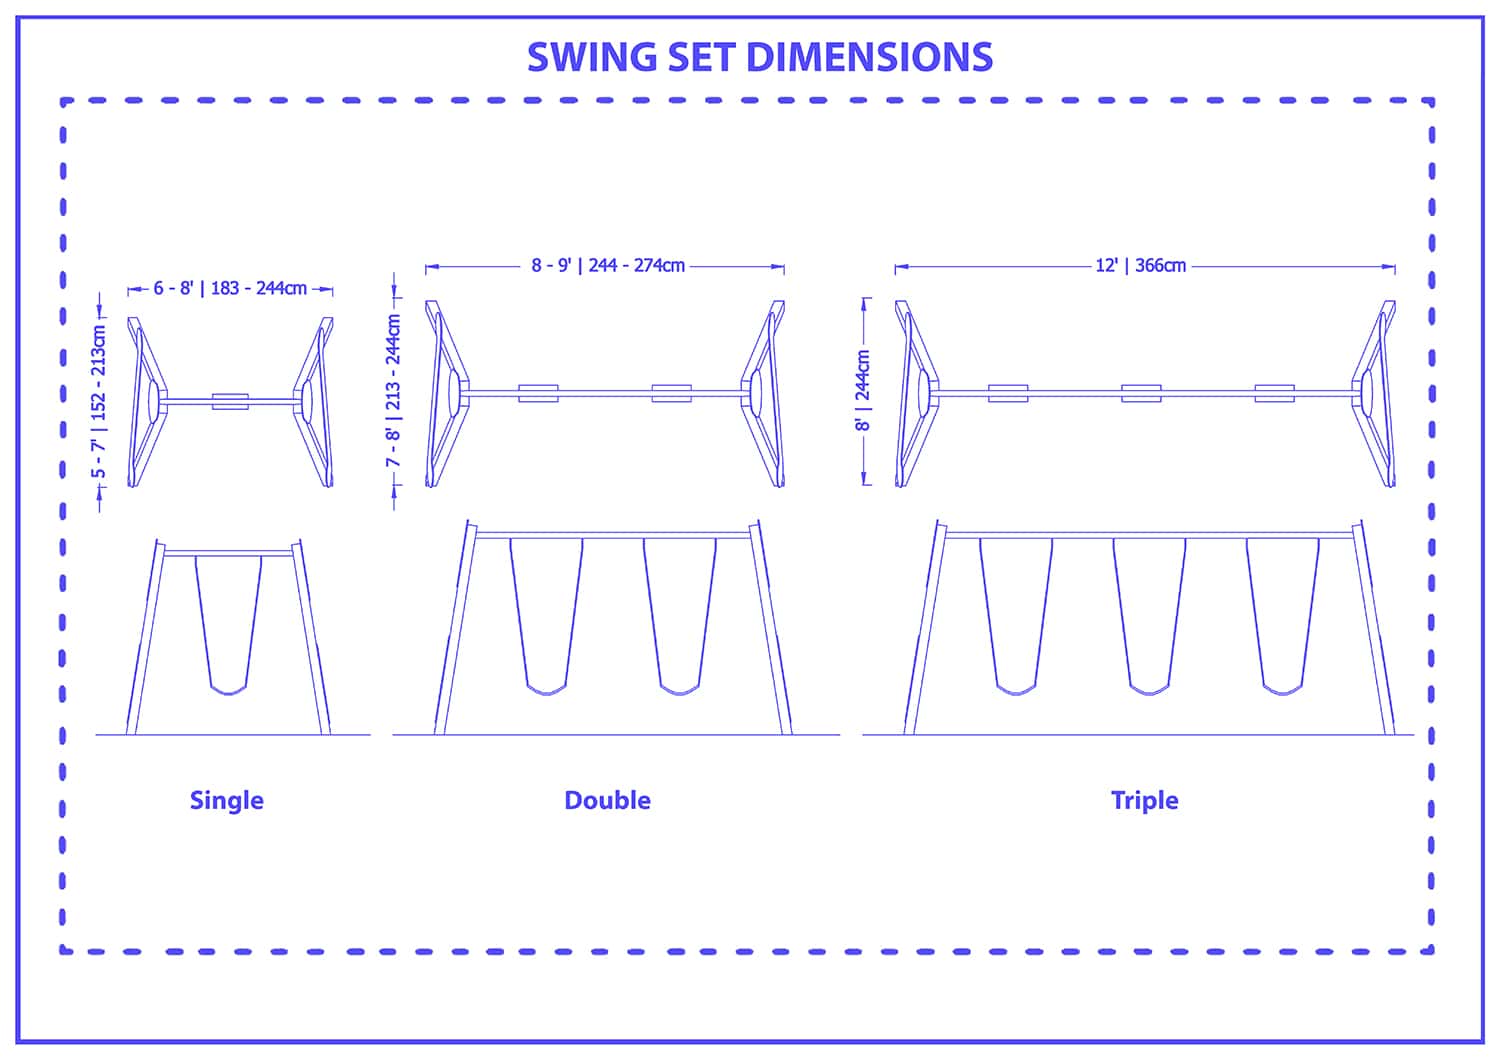 Swing set dimensions